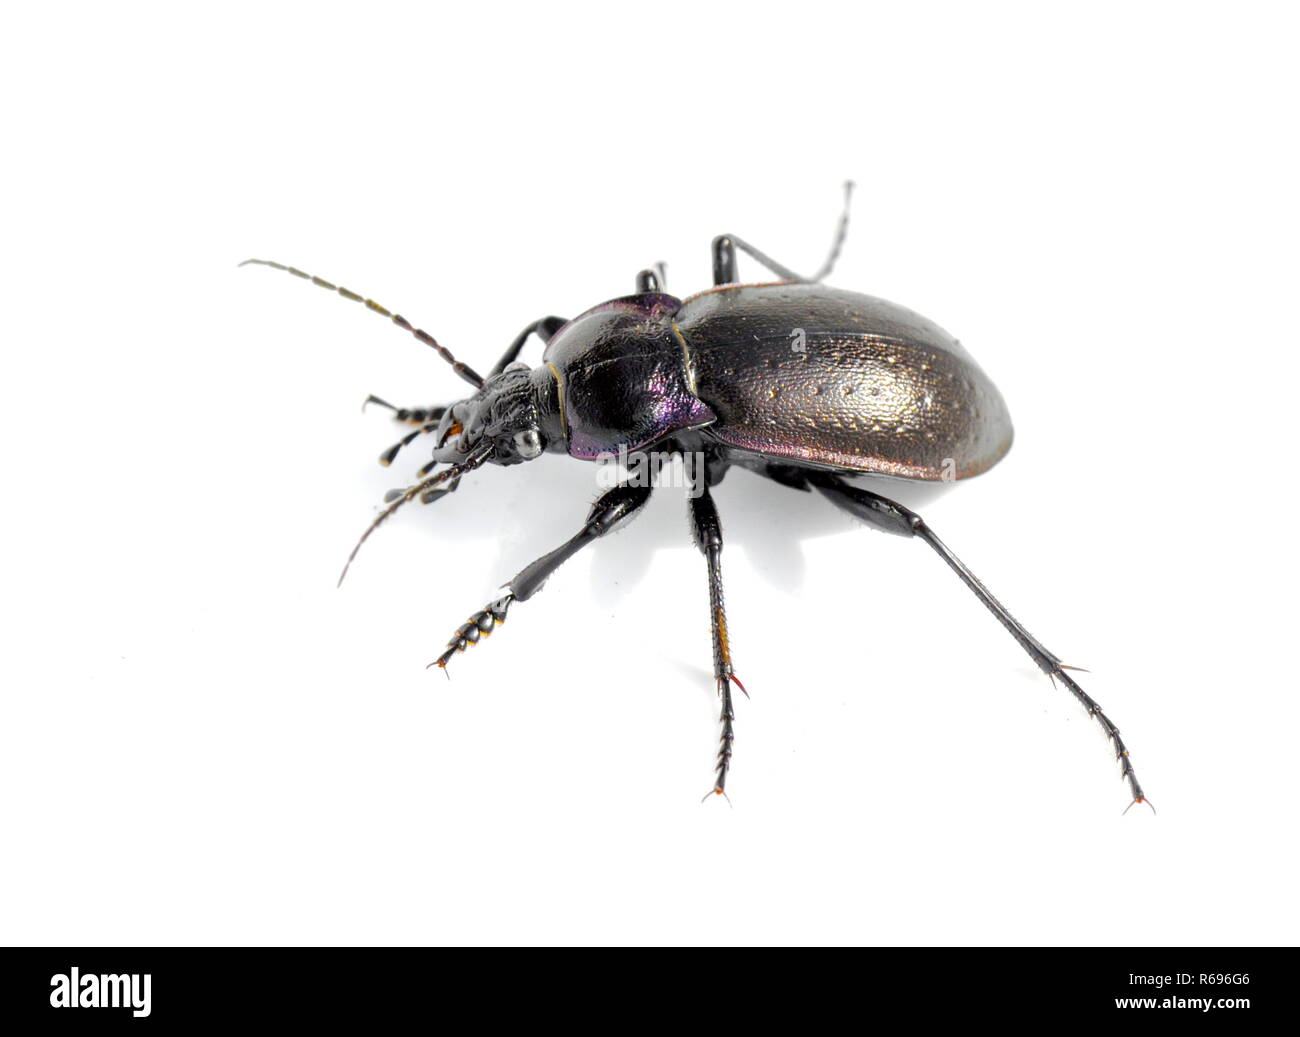 The ground beetle Carabus nemoralis on white background Stock Photo